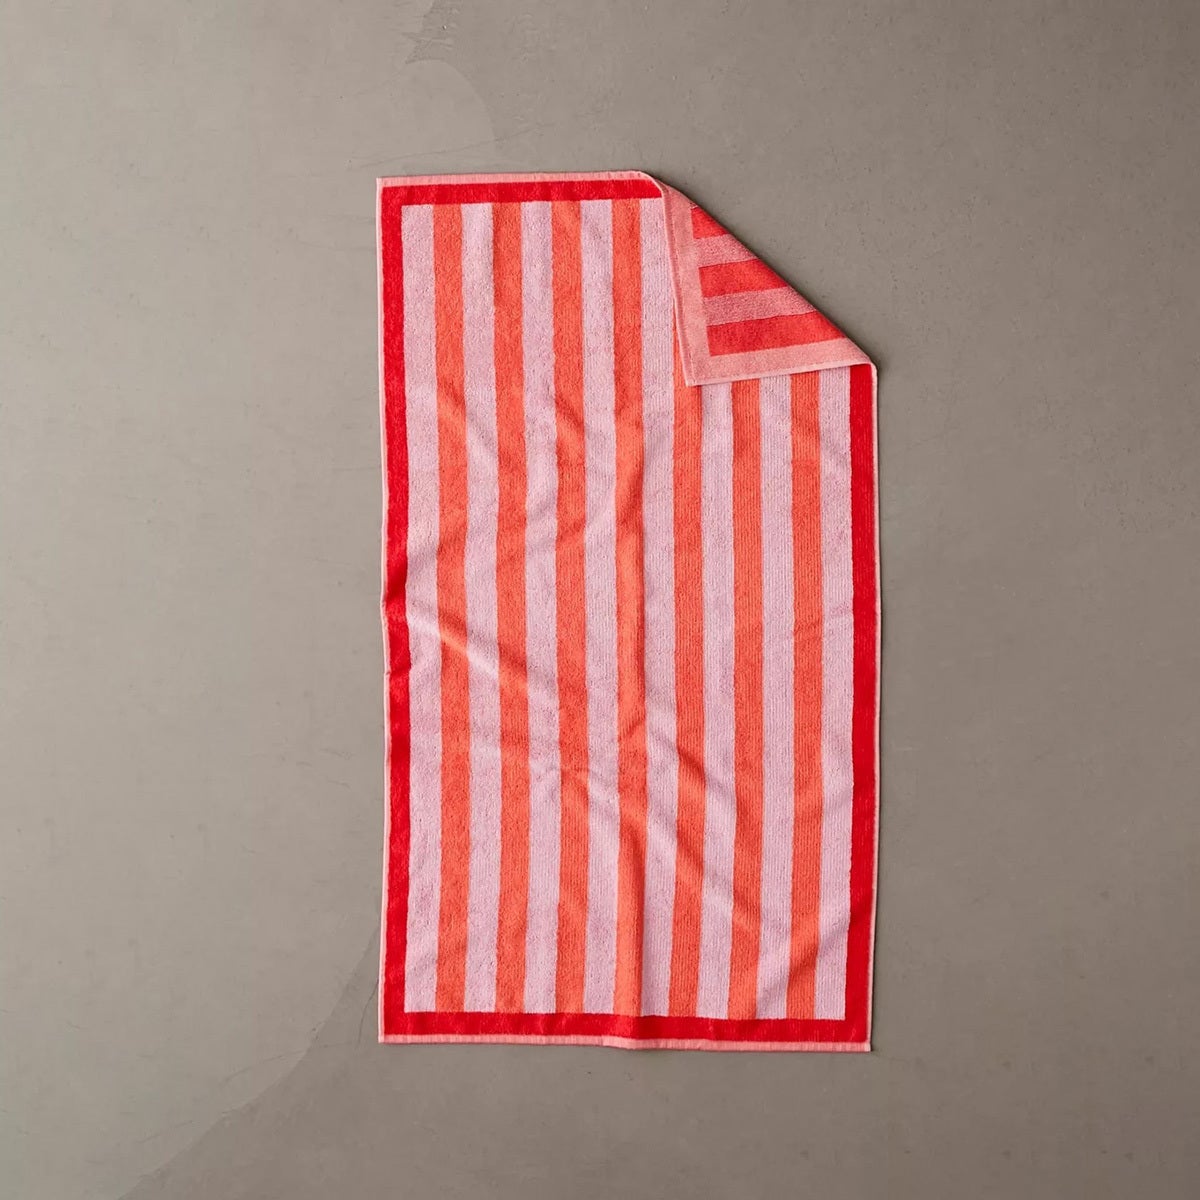 striped towel